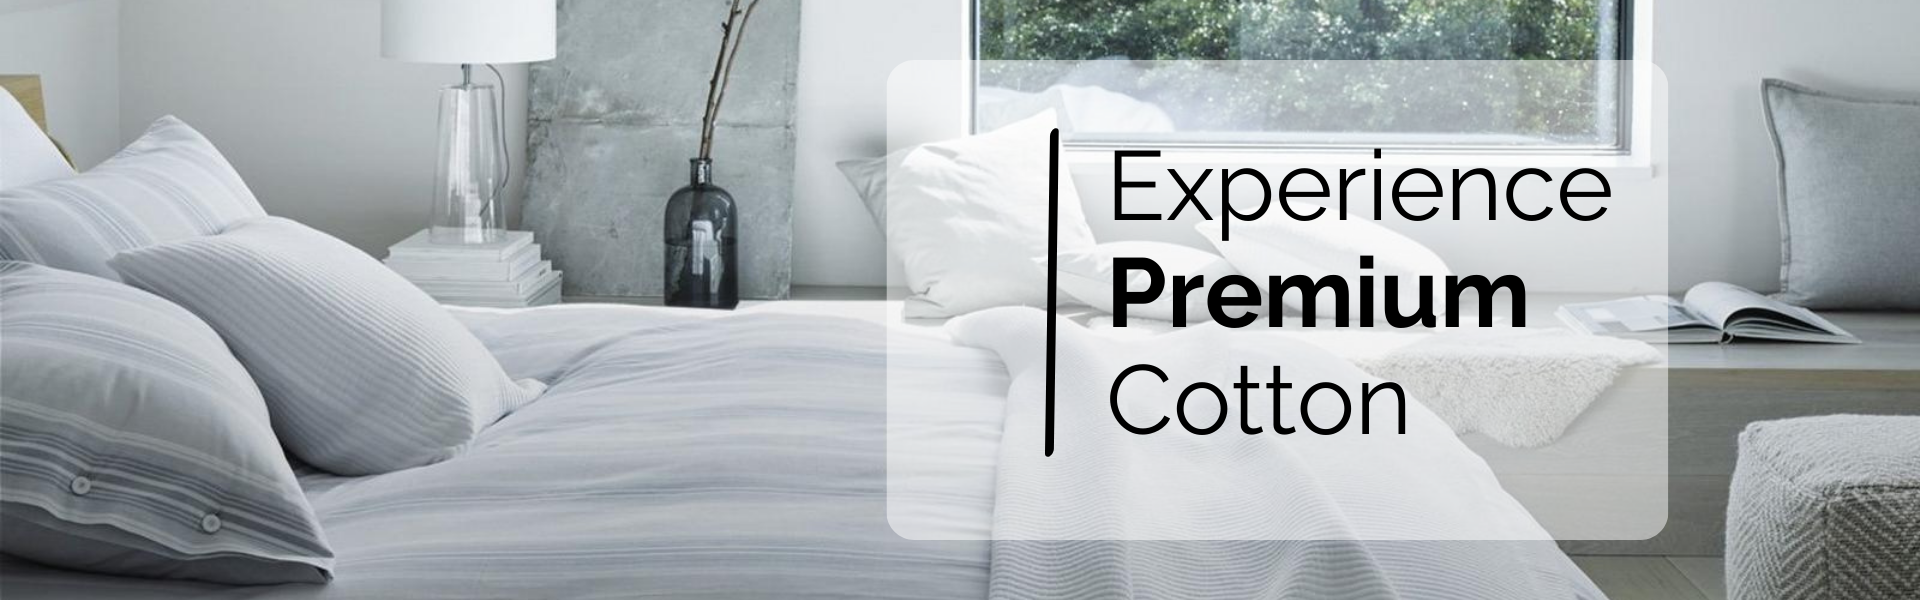 experience premium cotton homepage banner